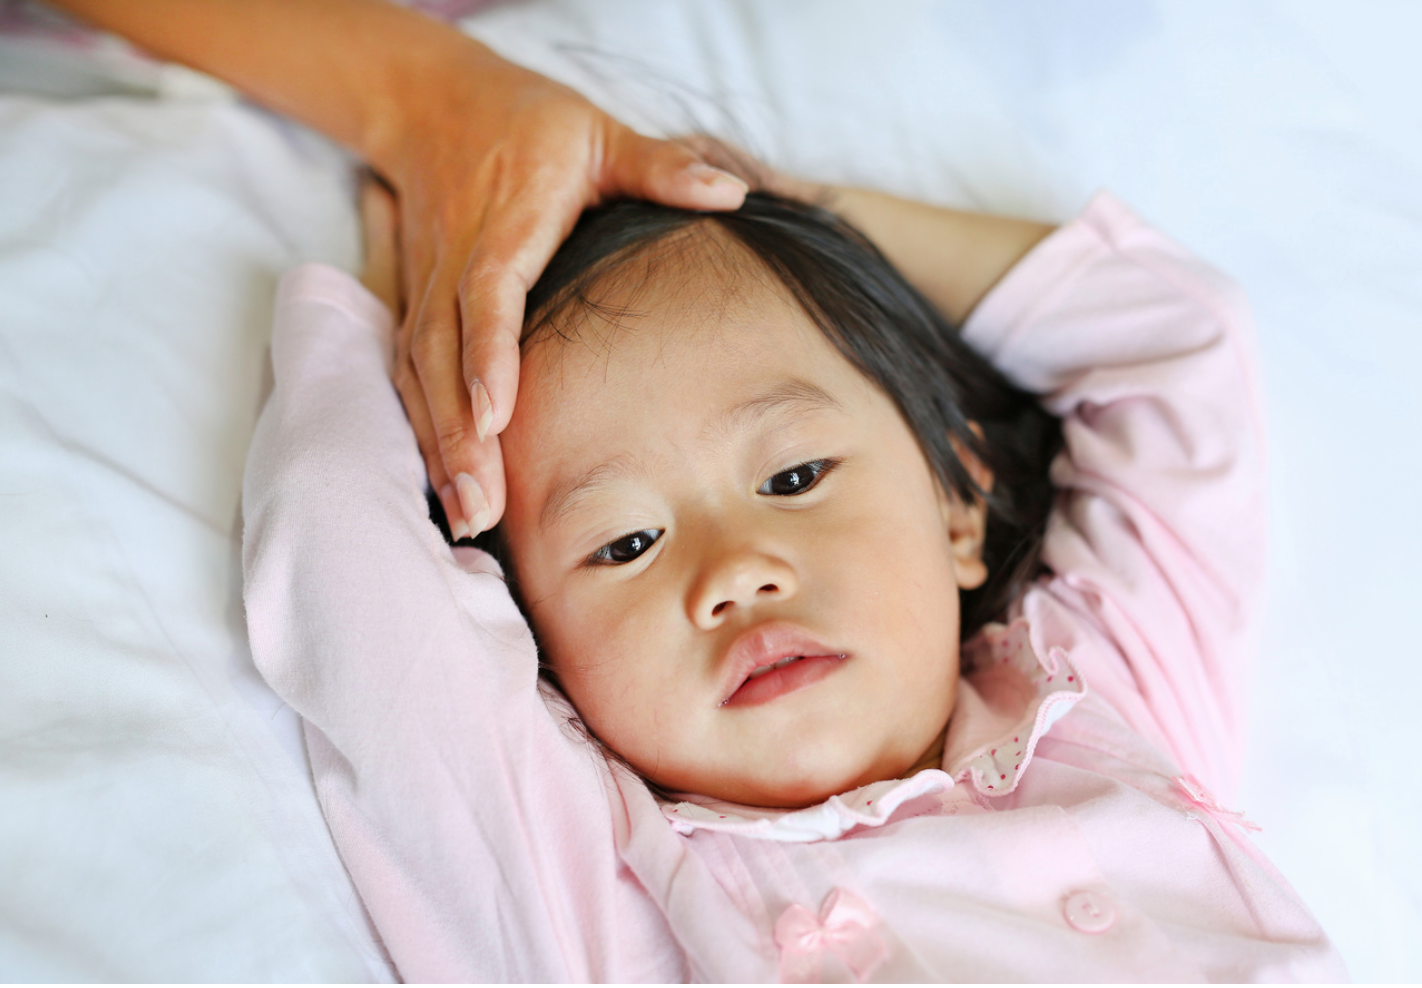 Respiratory Viruses Linked to Surge of Invasive Pneumococcal Disease in Children 